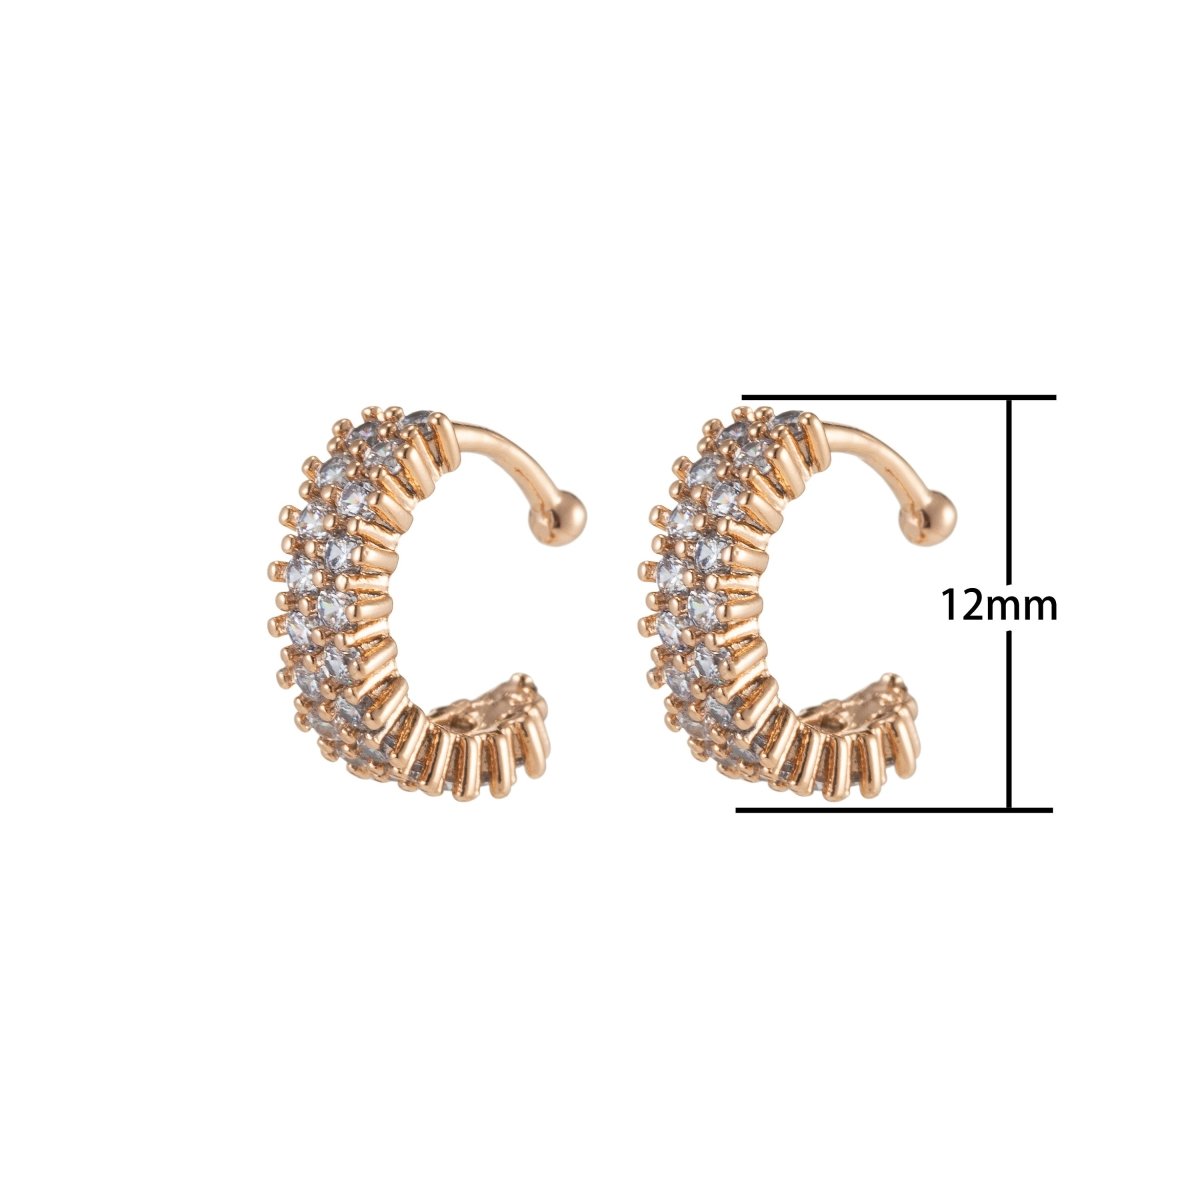 Chunky cz bezel - cuff earring - cuff - ear cuff - gold cuff - silver - conch - no piercing - cuffs - helix - cartilage - earring, AI-041 - DLUXCA